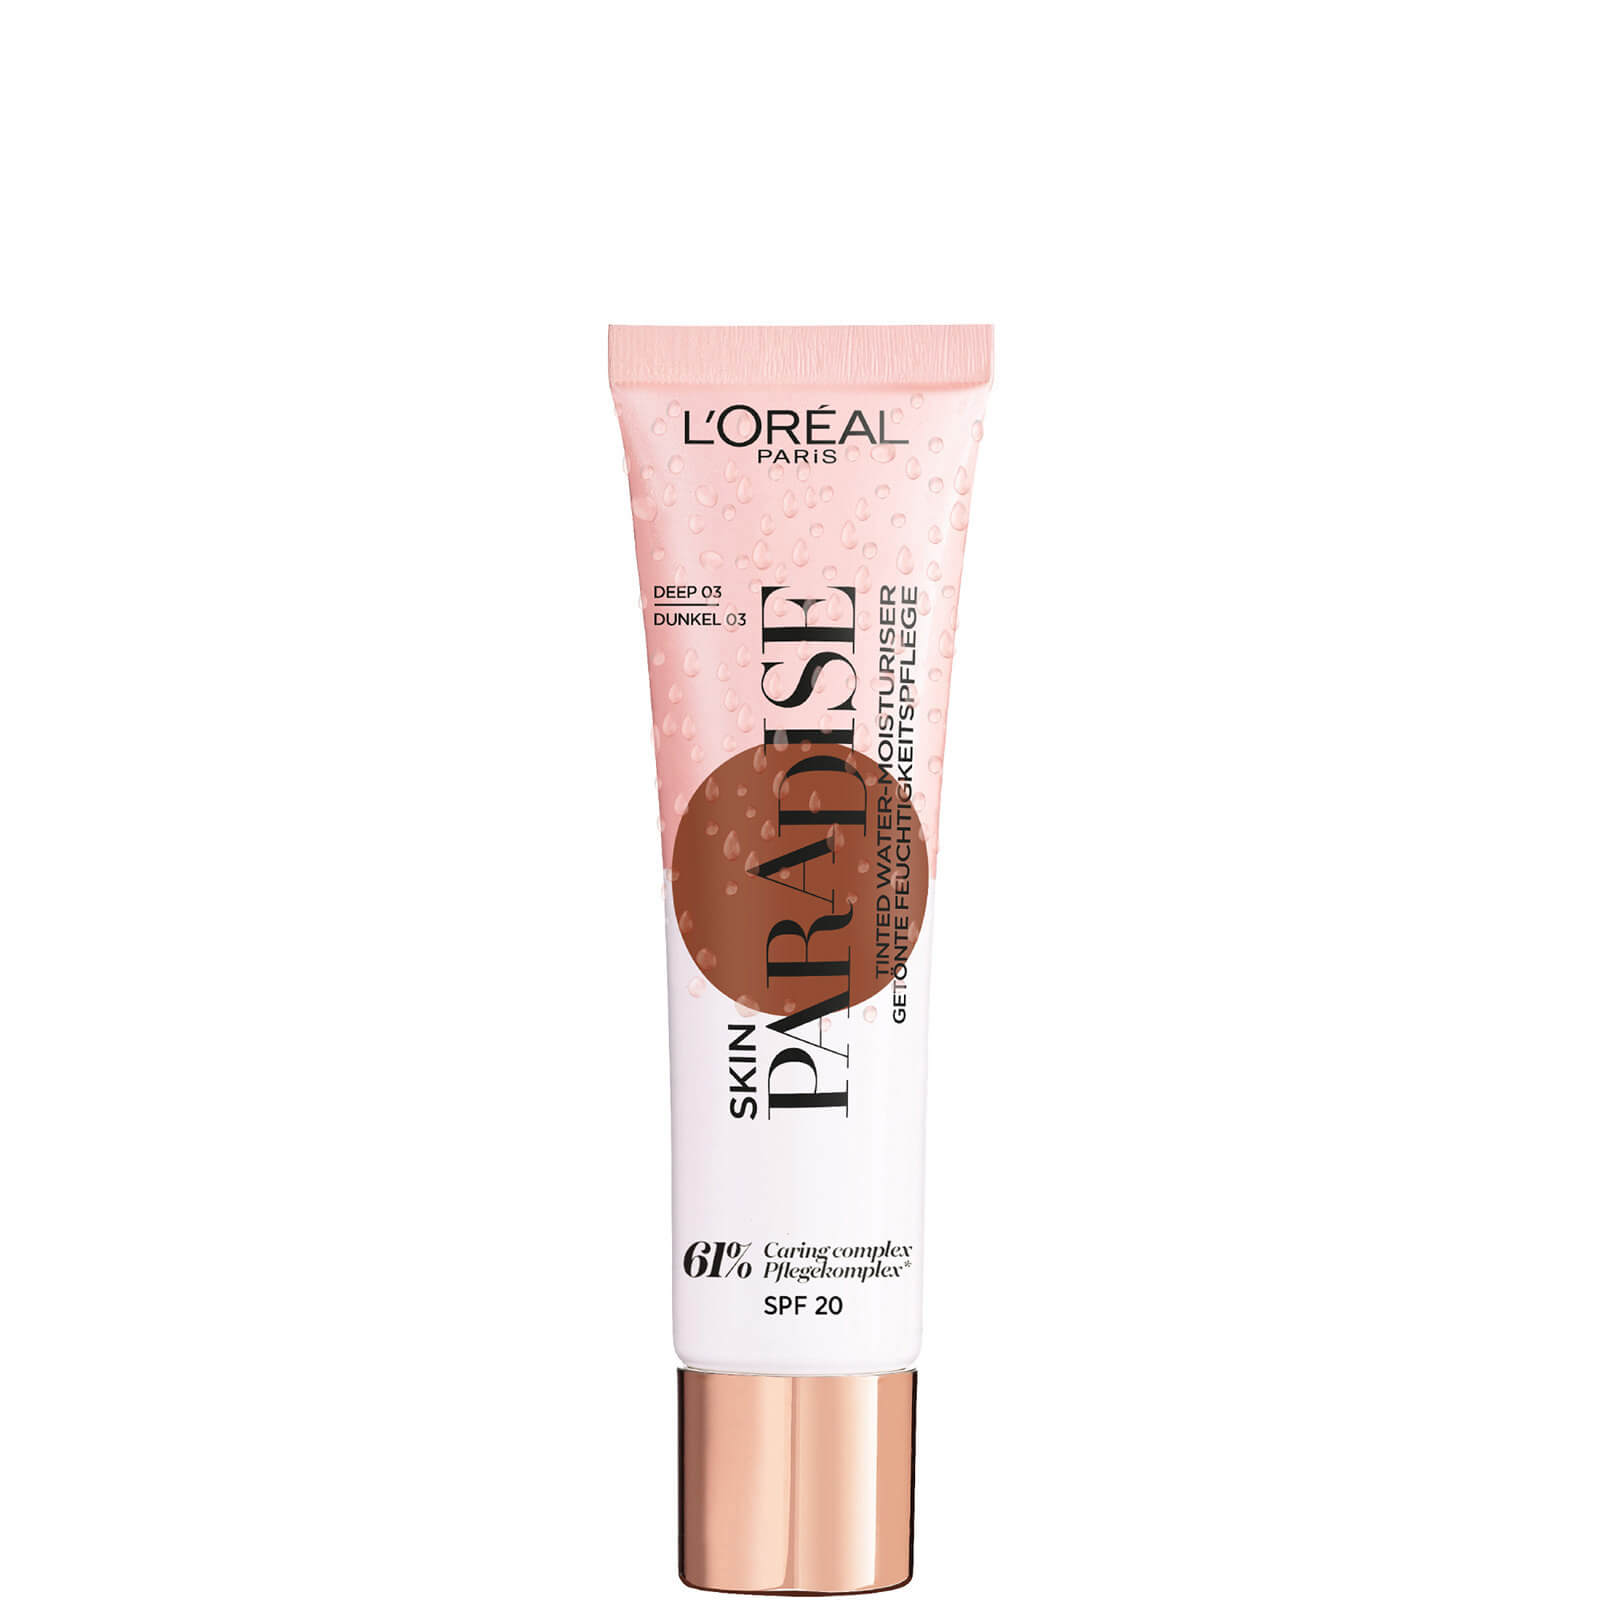 L'Oréal Paris Skin Paradise Tinted Moisturiser SPF20 30ml (Various Shades) - Deep 03